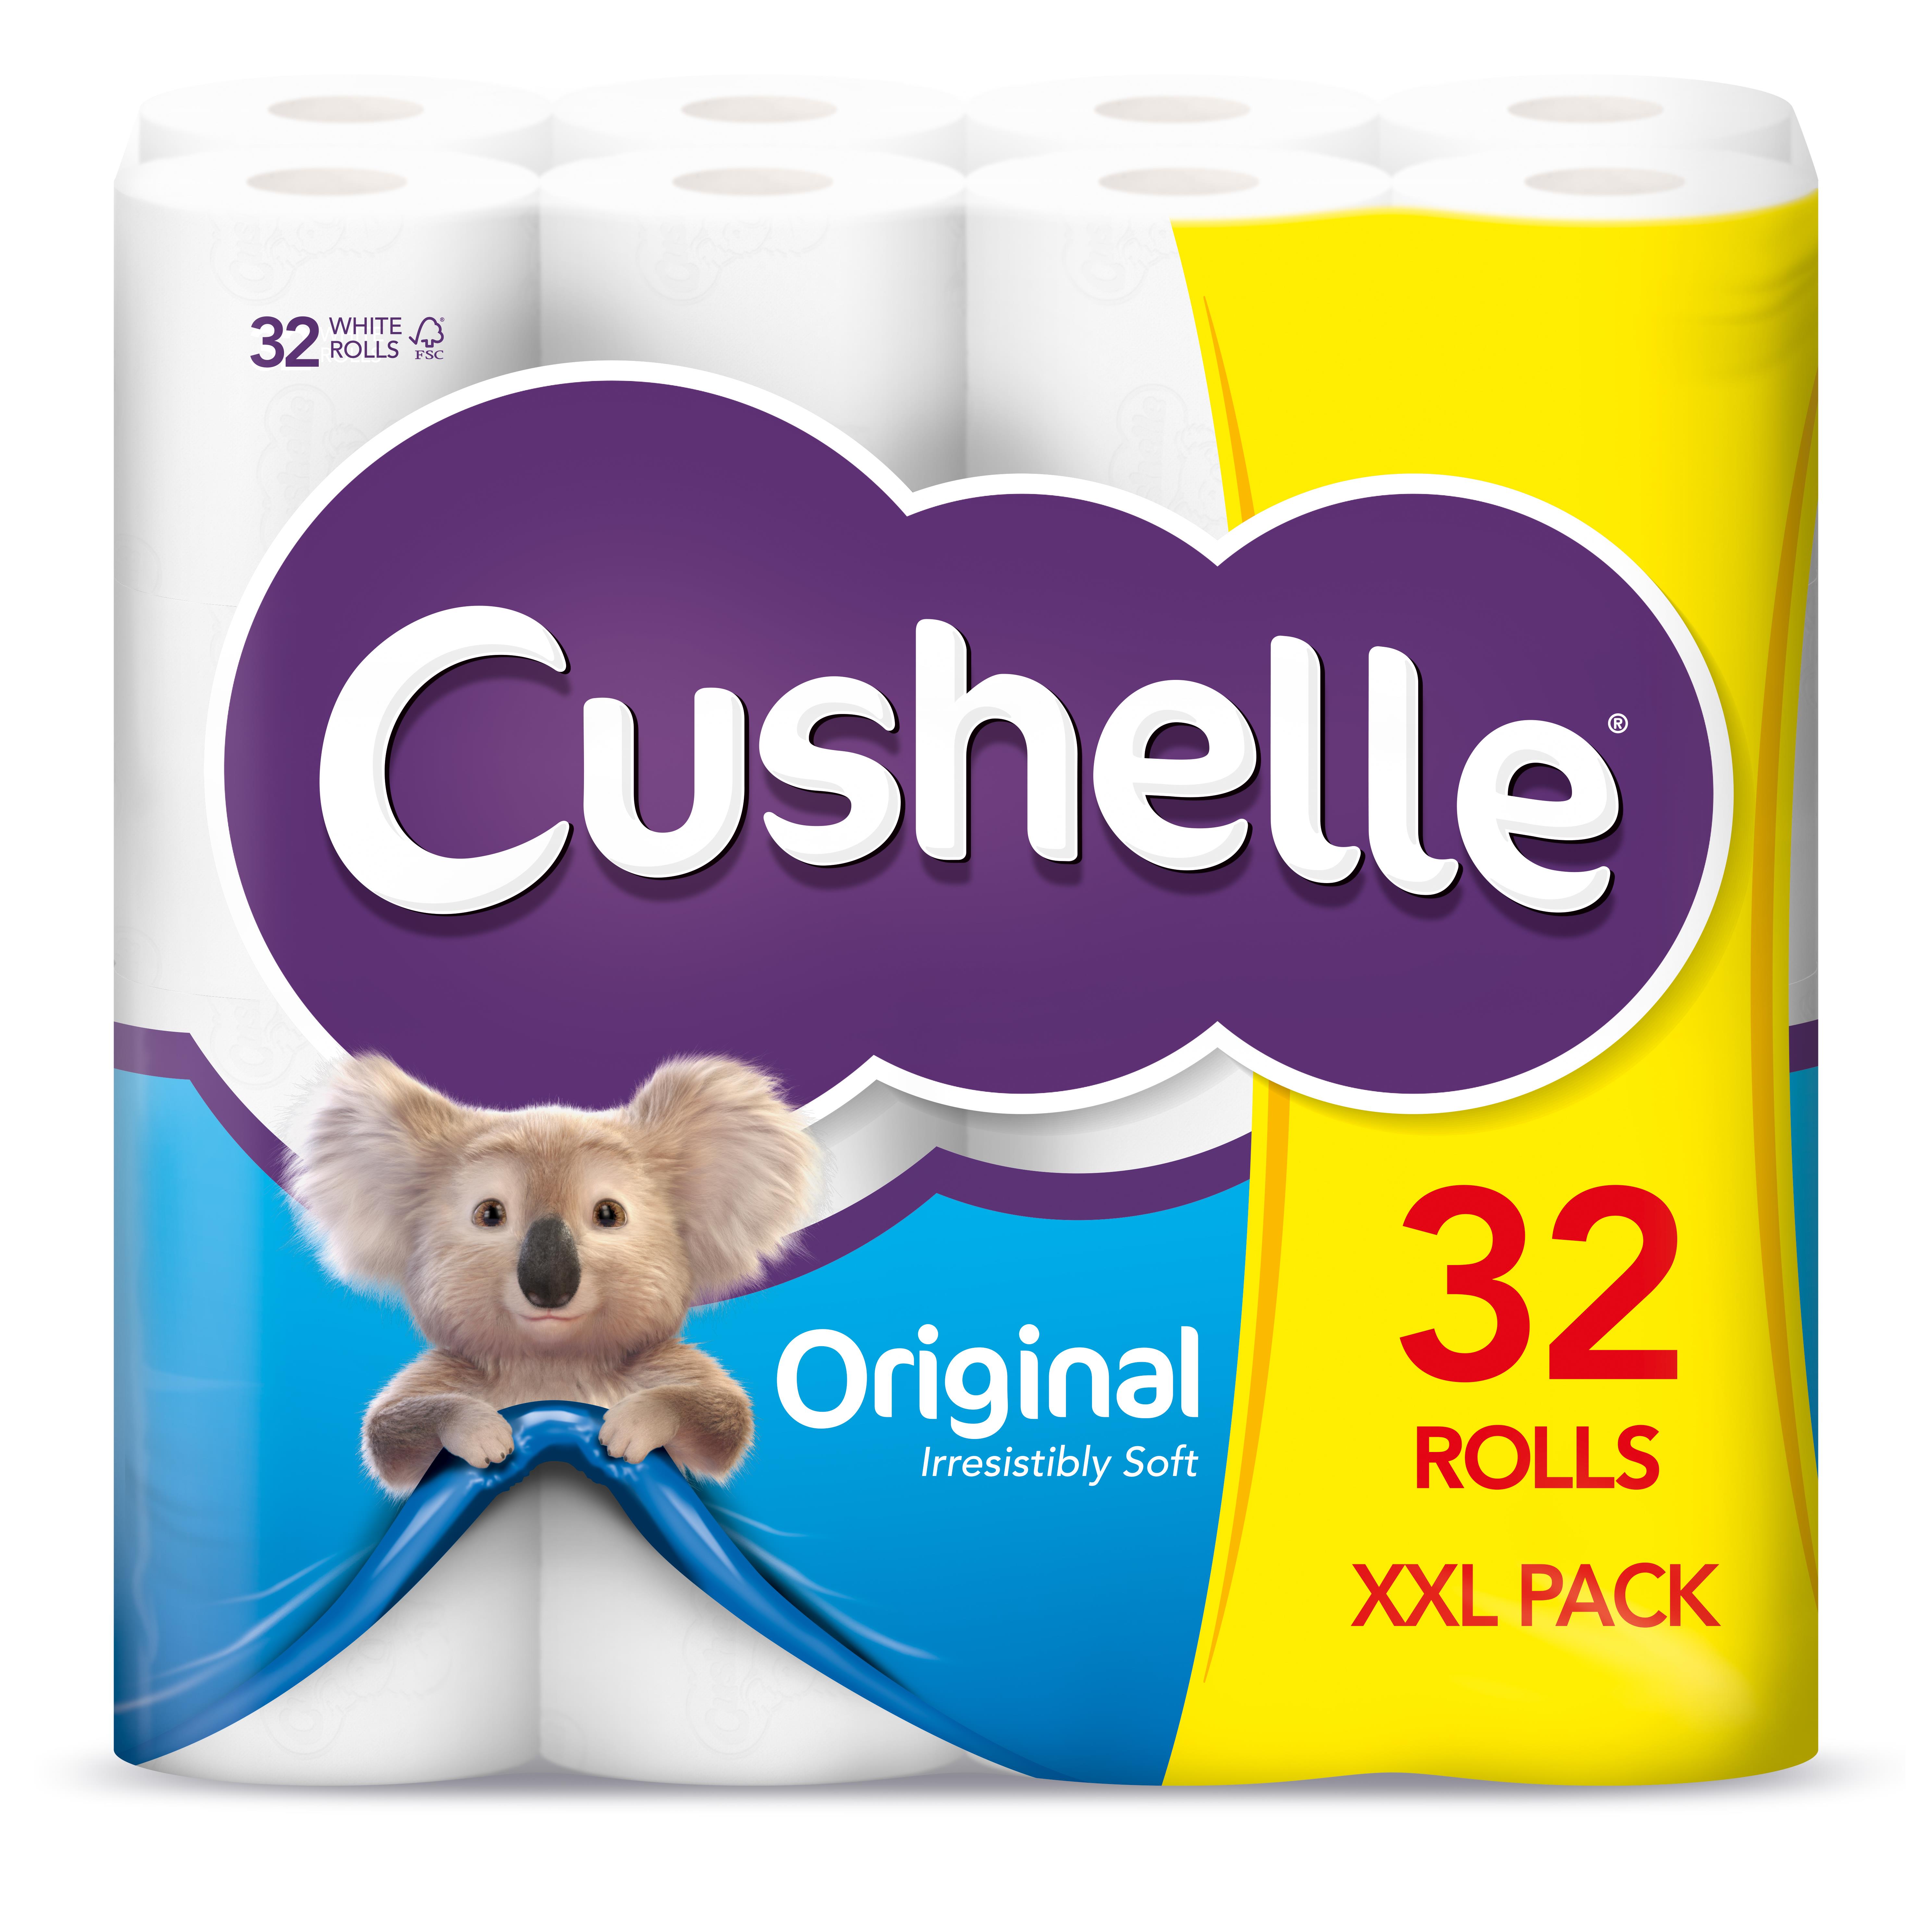 cushelle, toilet rolls, paper, tissue, luxurious, premium, strong,branded 